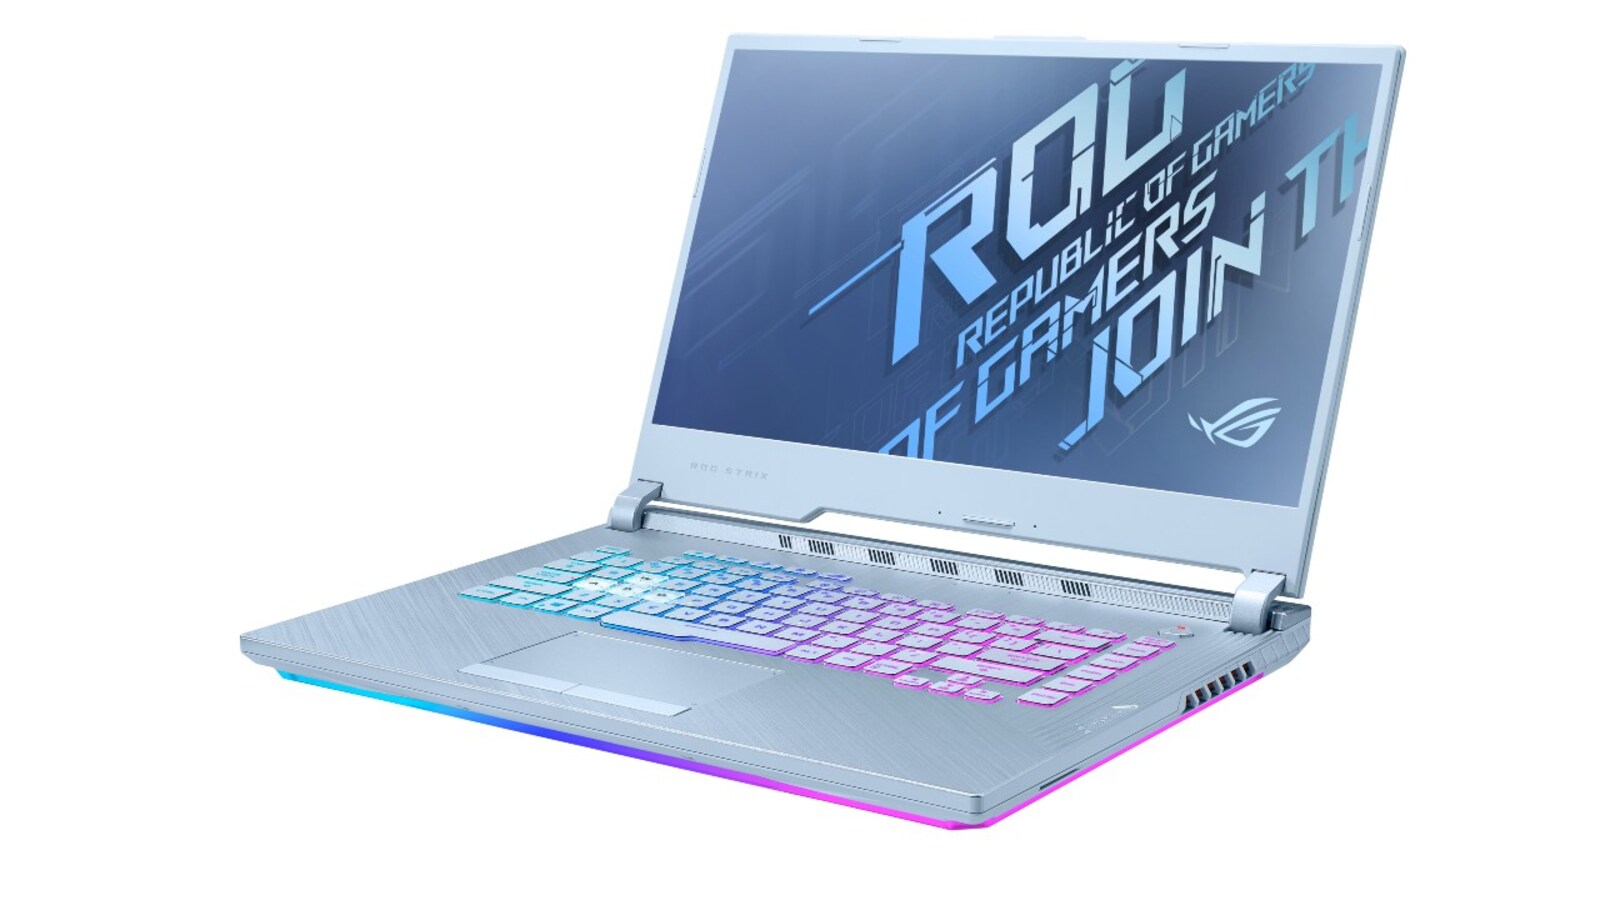 Asus ROG Strix Scar and Strix gaming laptops launched in India alongside  GA35 gaming desktop 